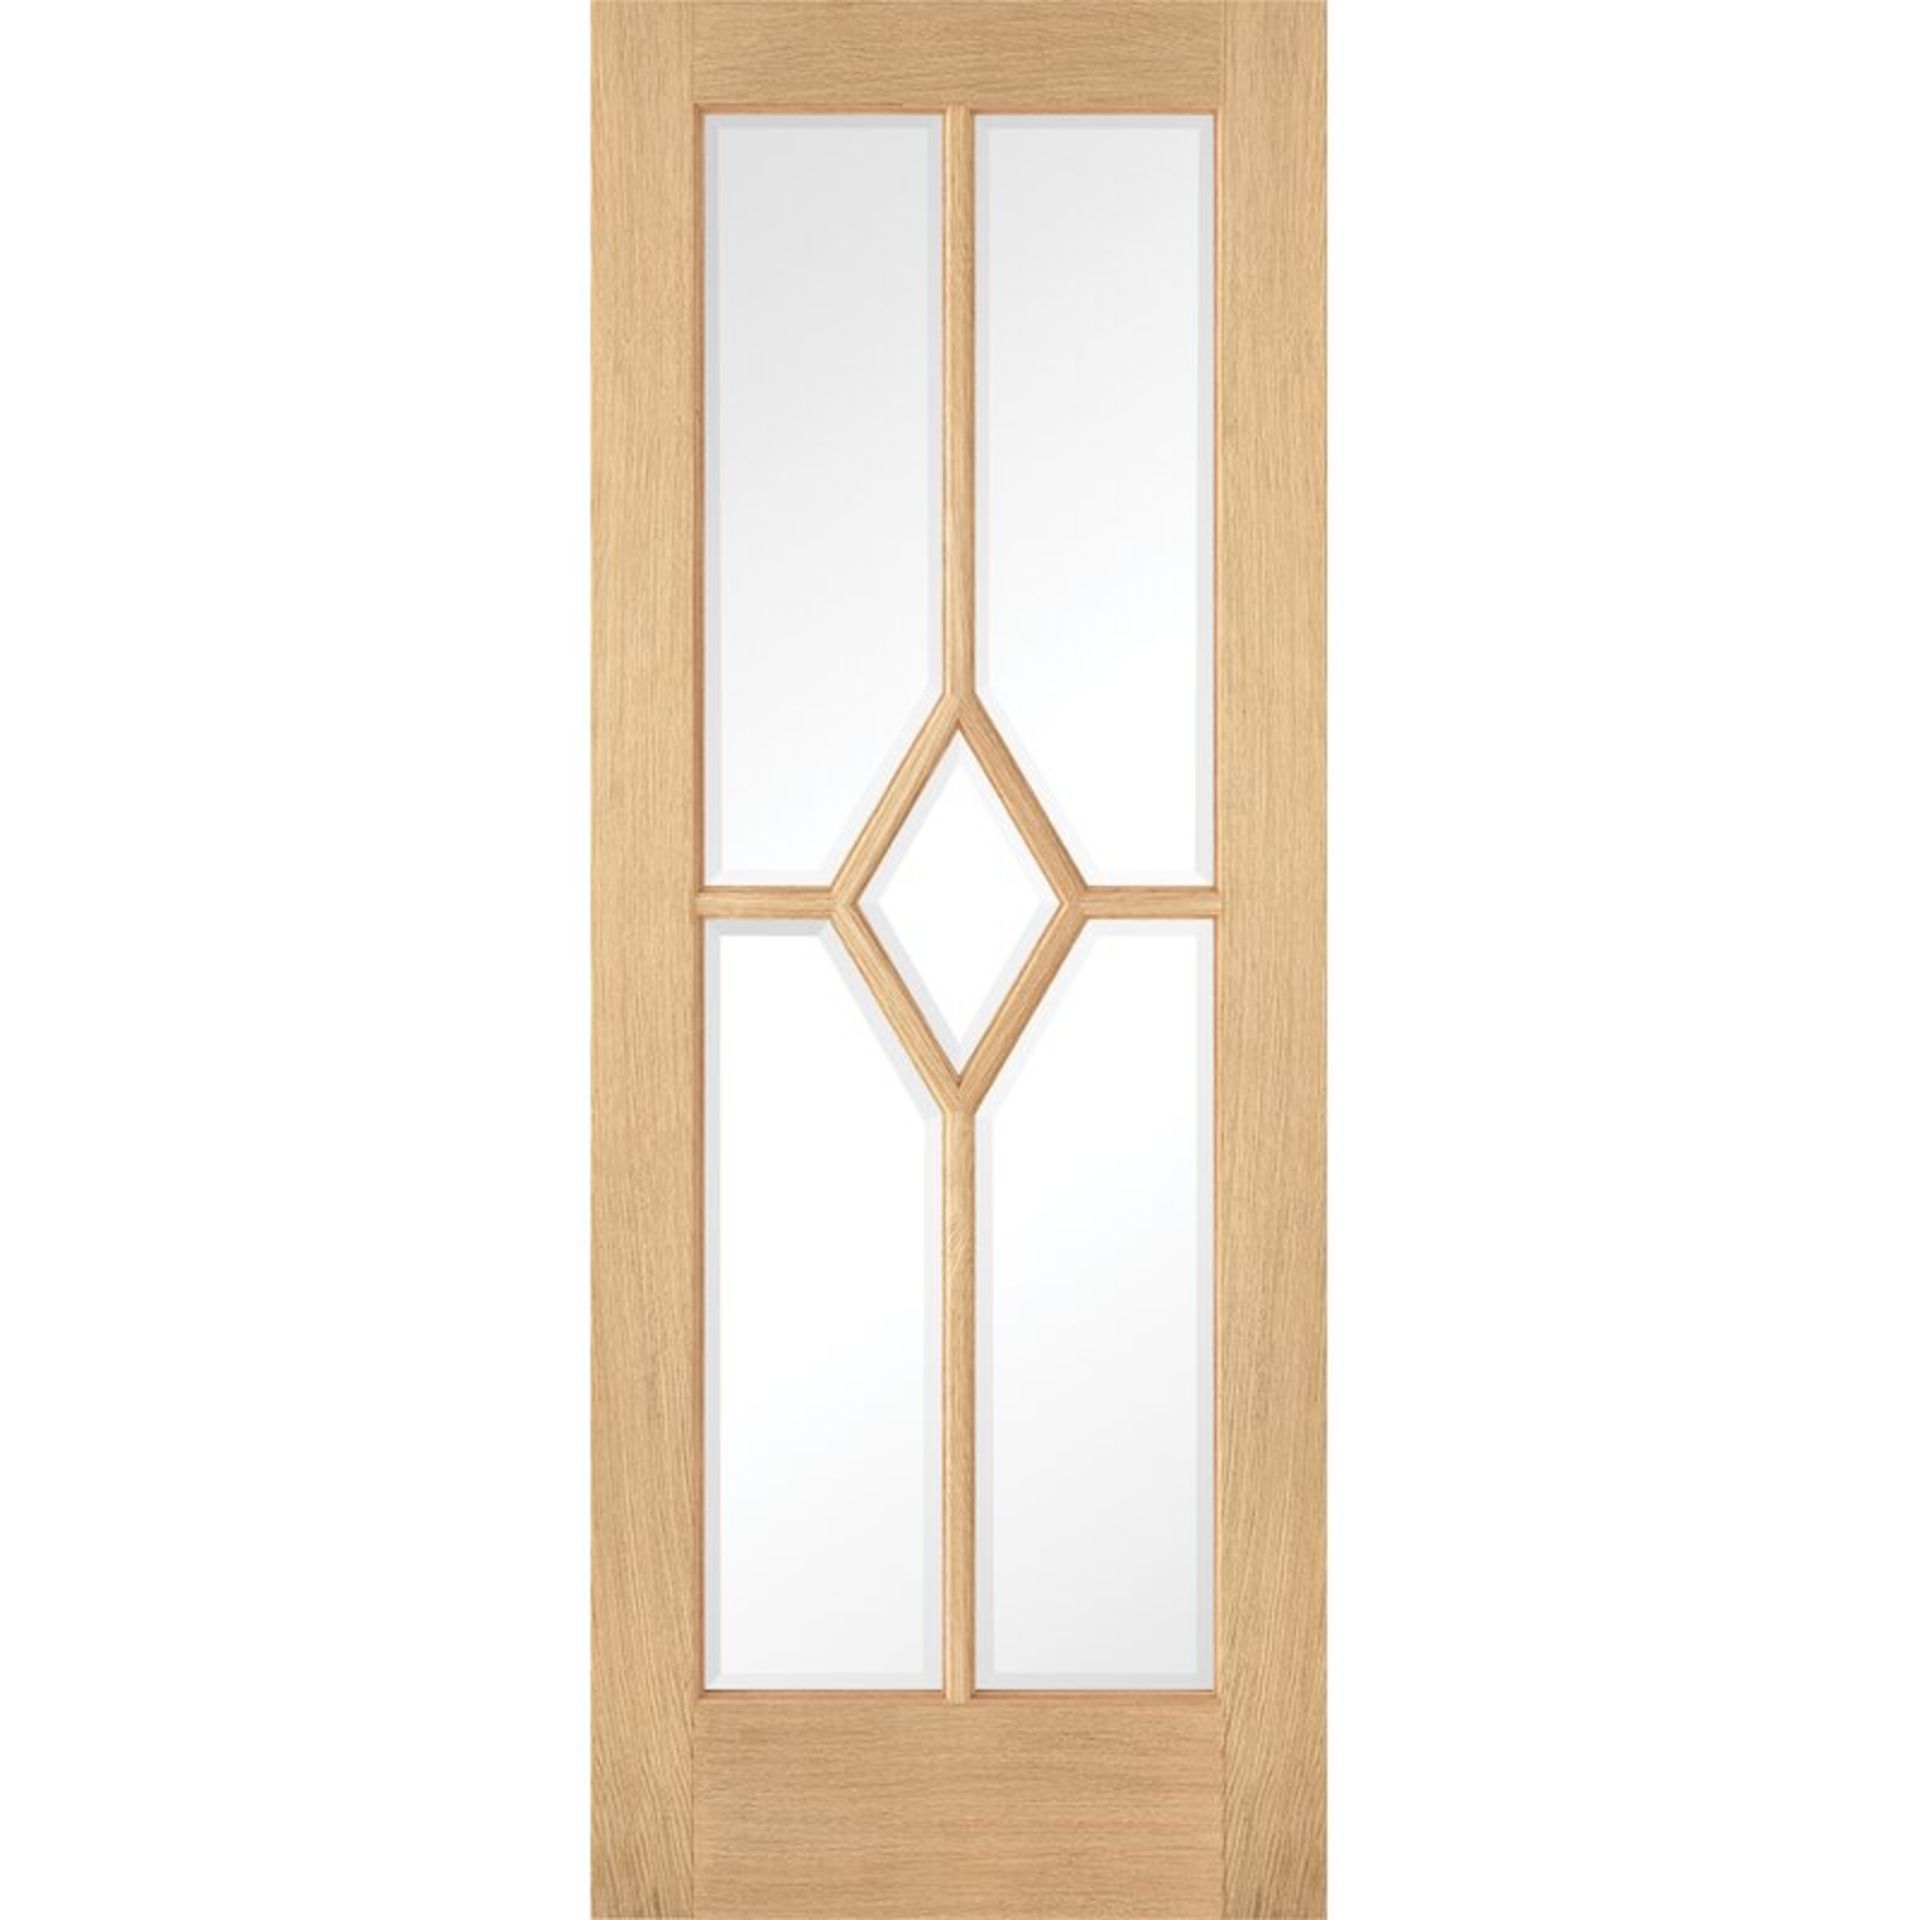 3 x LPD Oak reims centre doors, 579 x 1981 x 34mm - Image 2 of 3